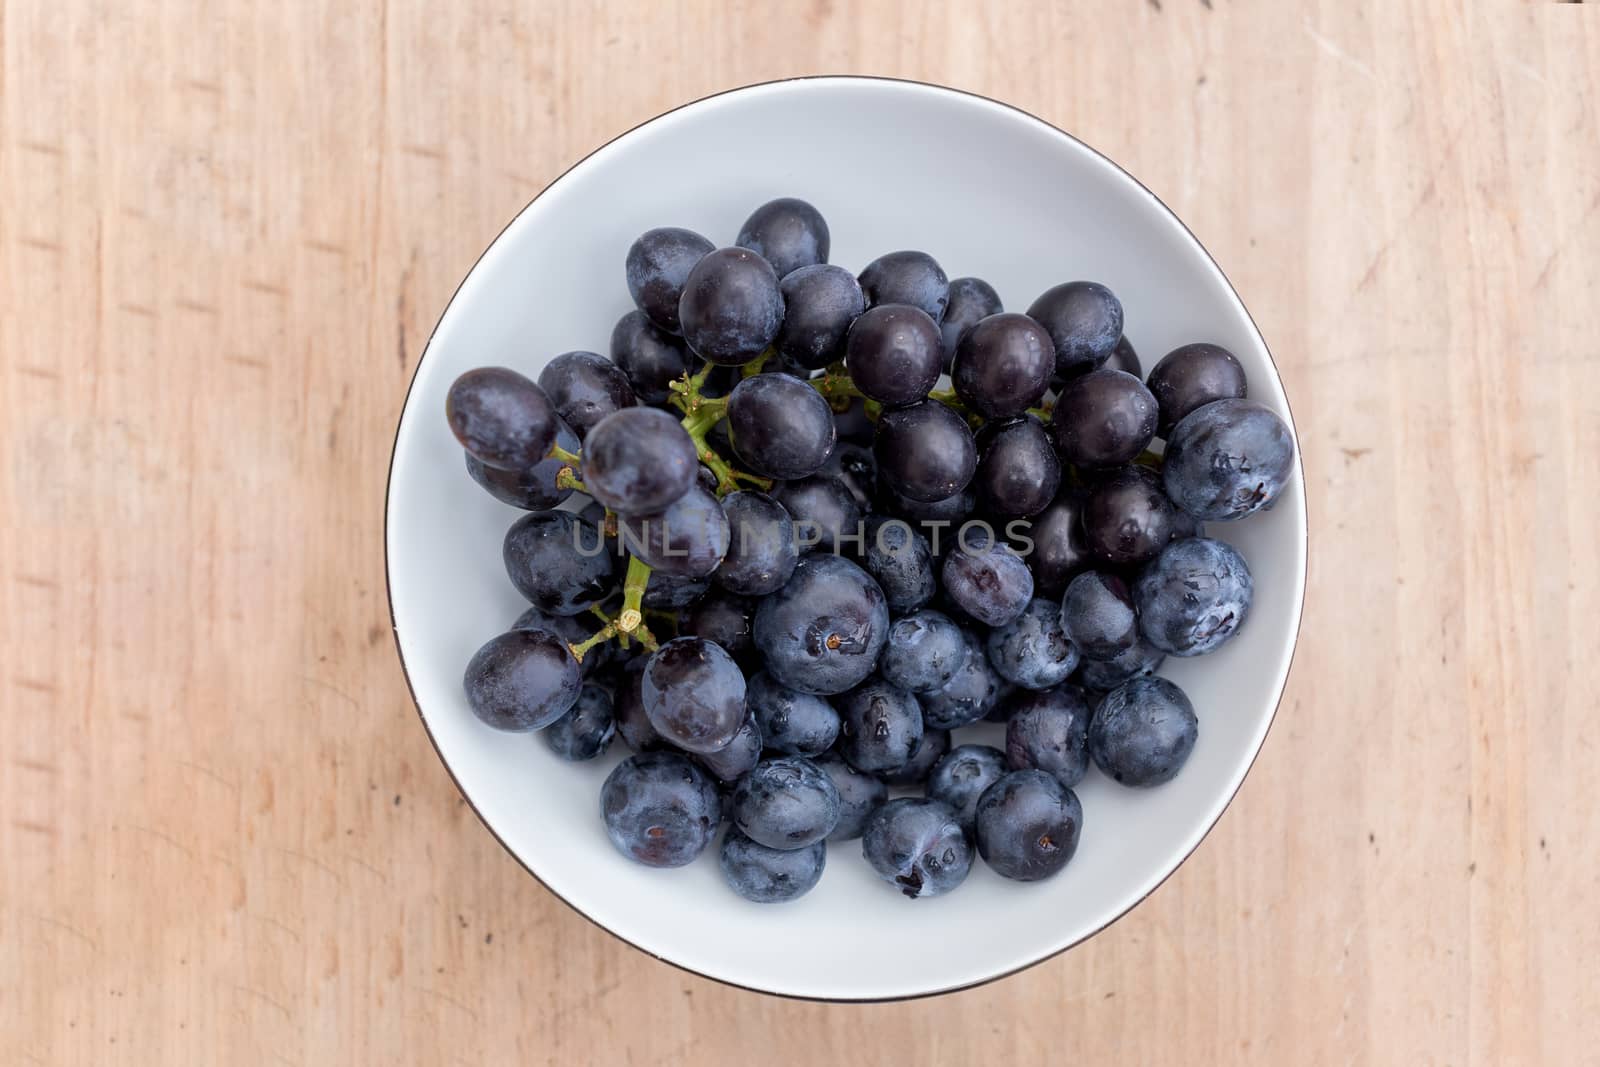 Bowl of ripe blueberries